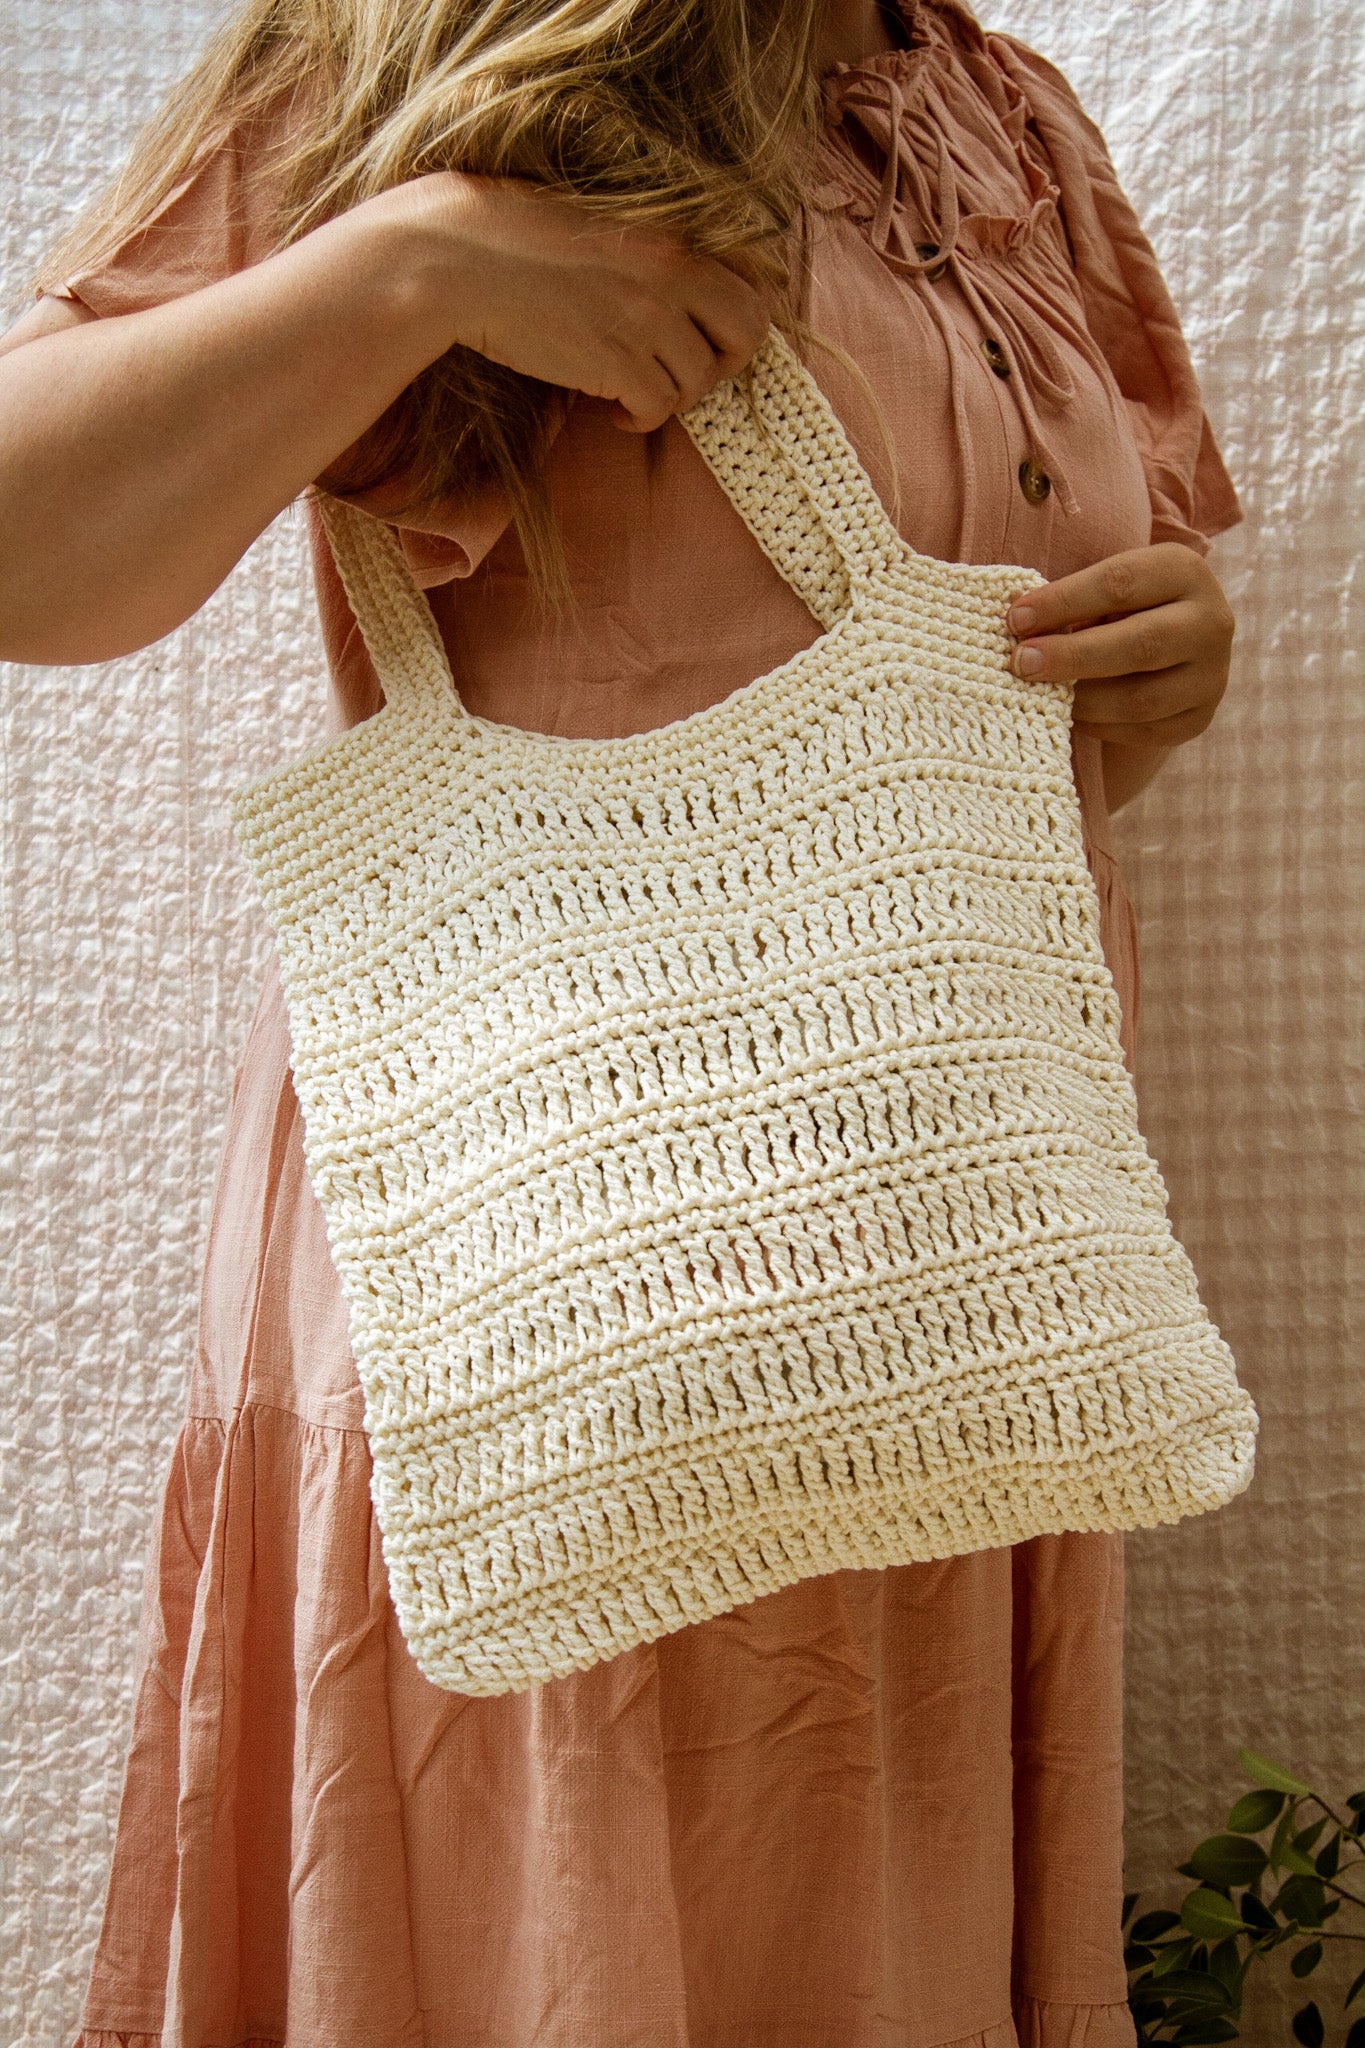 Chunky Crochet Tote Bag: Free Pattern